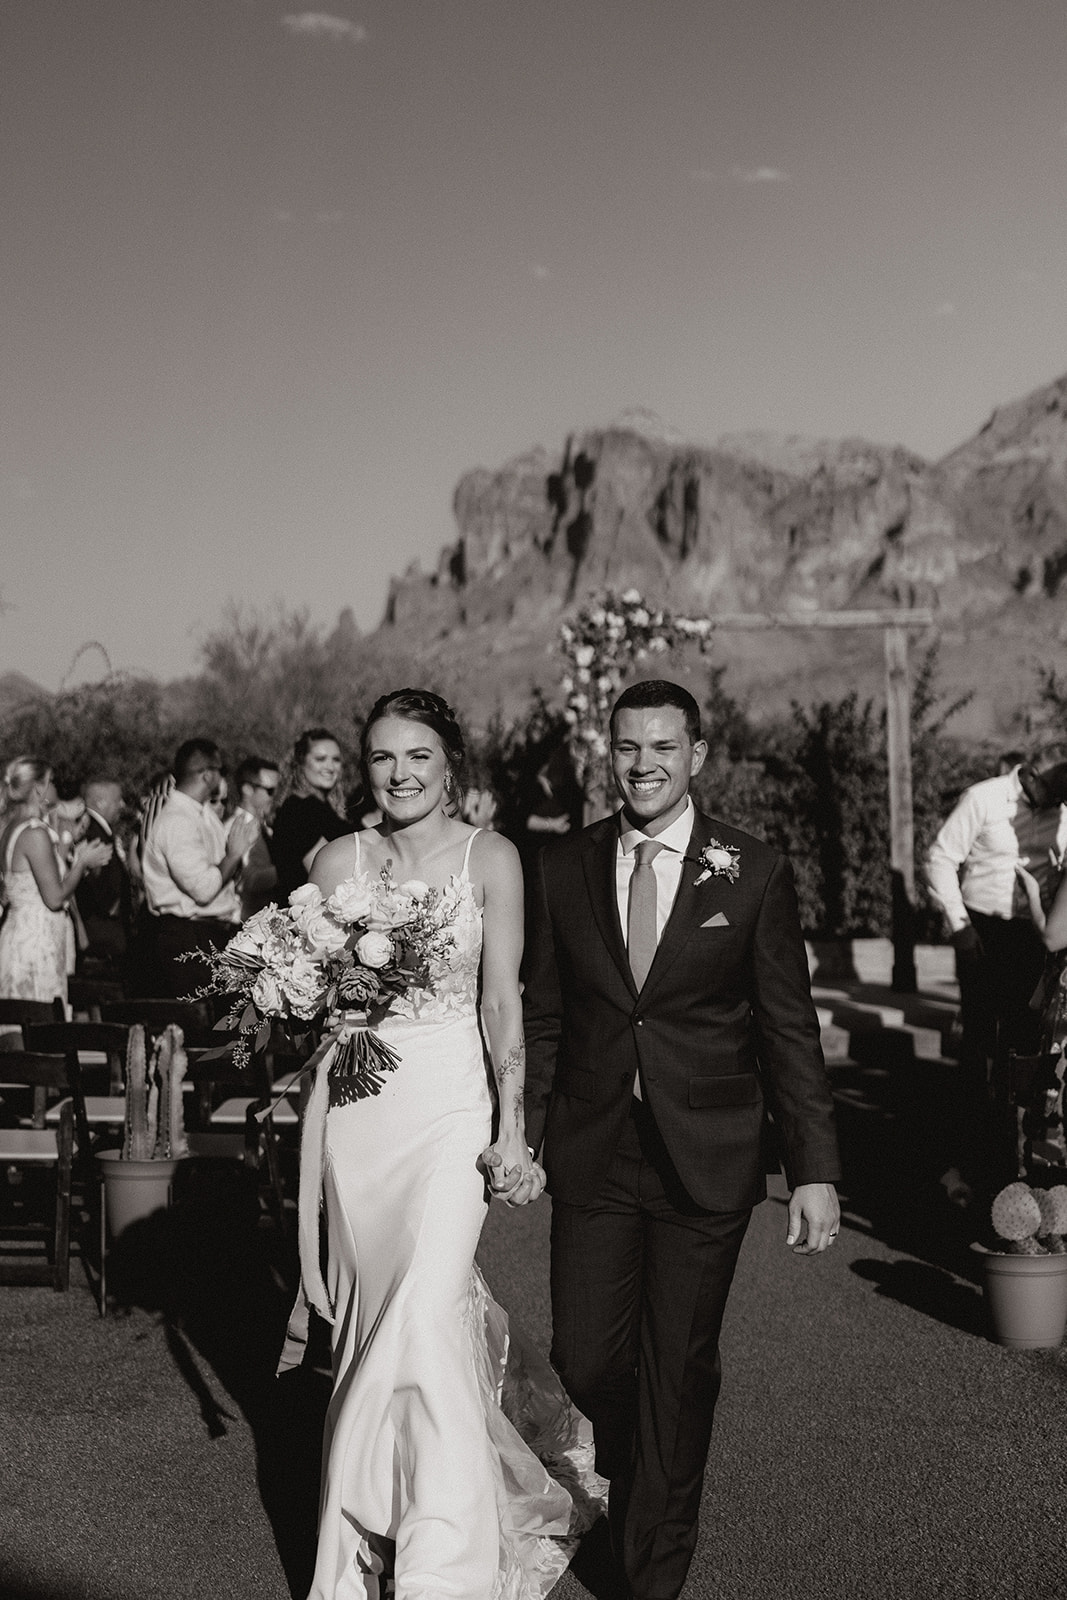 Stunning bride and groom exit their dreamy Arizona wedding ceremony